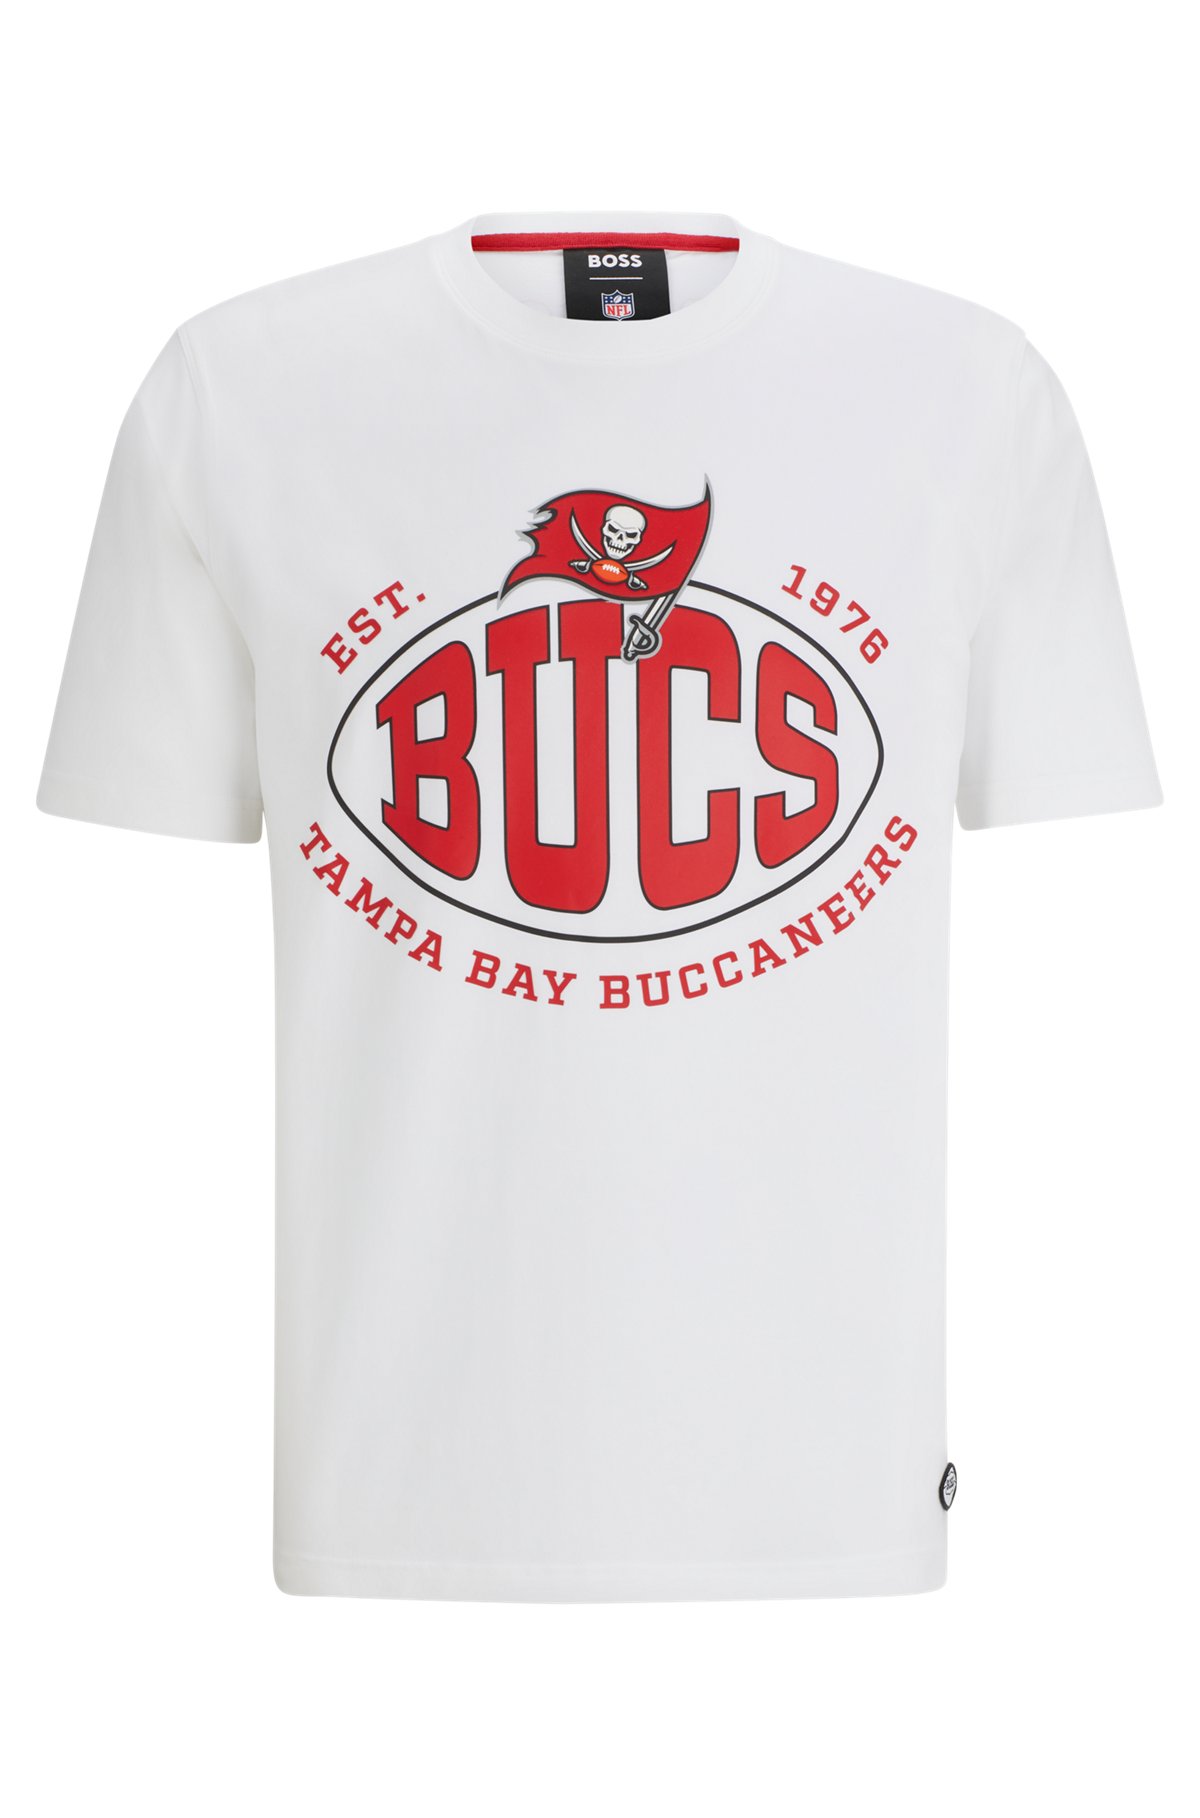 buccaneers tee shirts